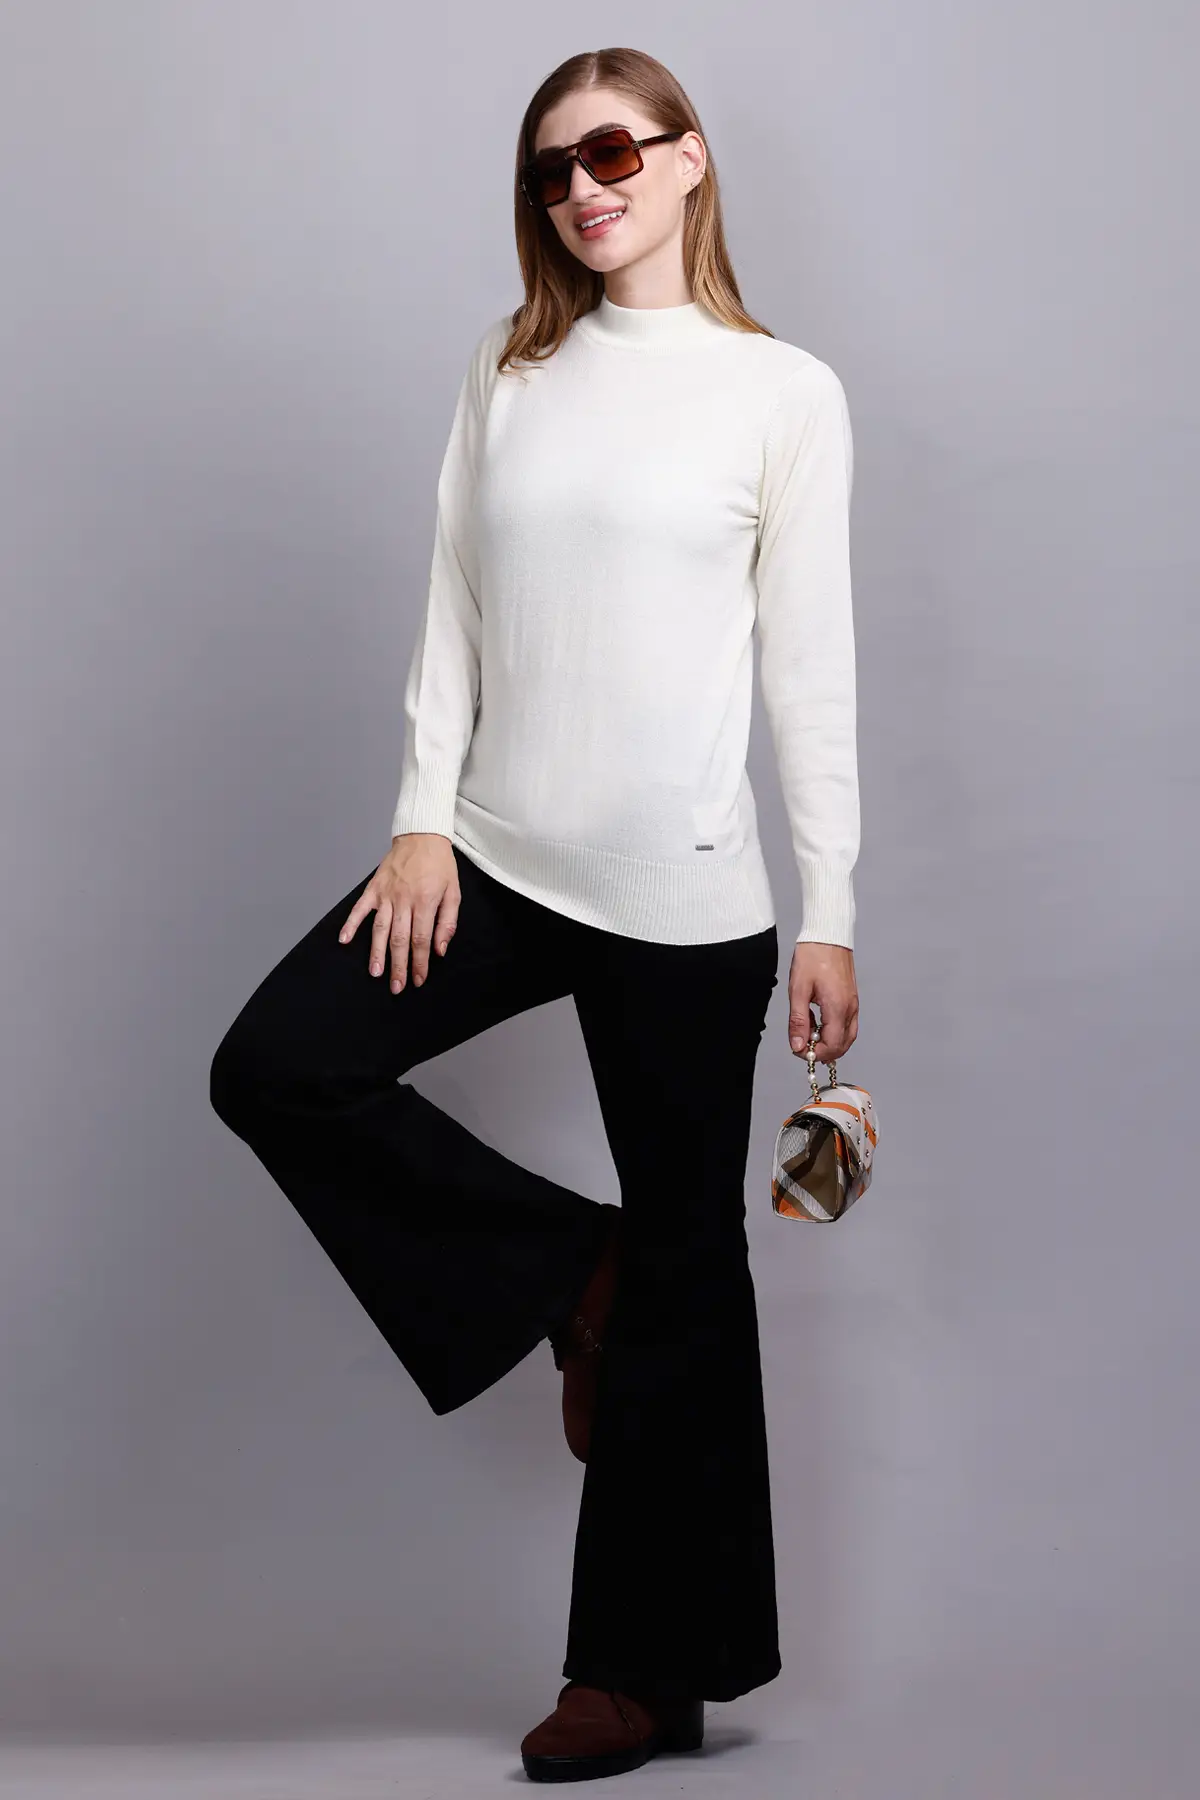 Off White Full Sleeve Woolen Turtle Neck Sweater For Women - GODFREY